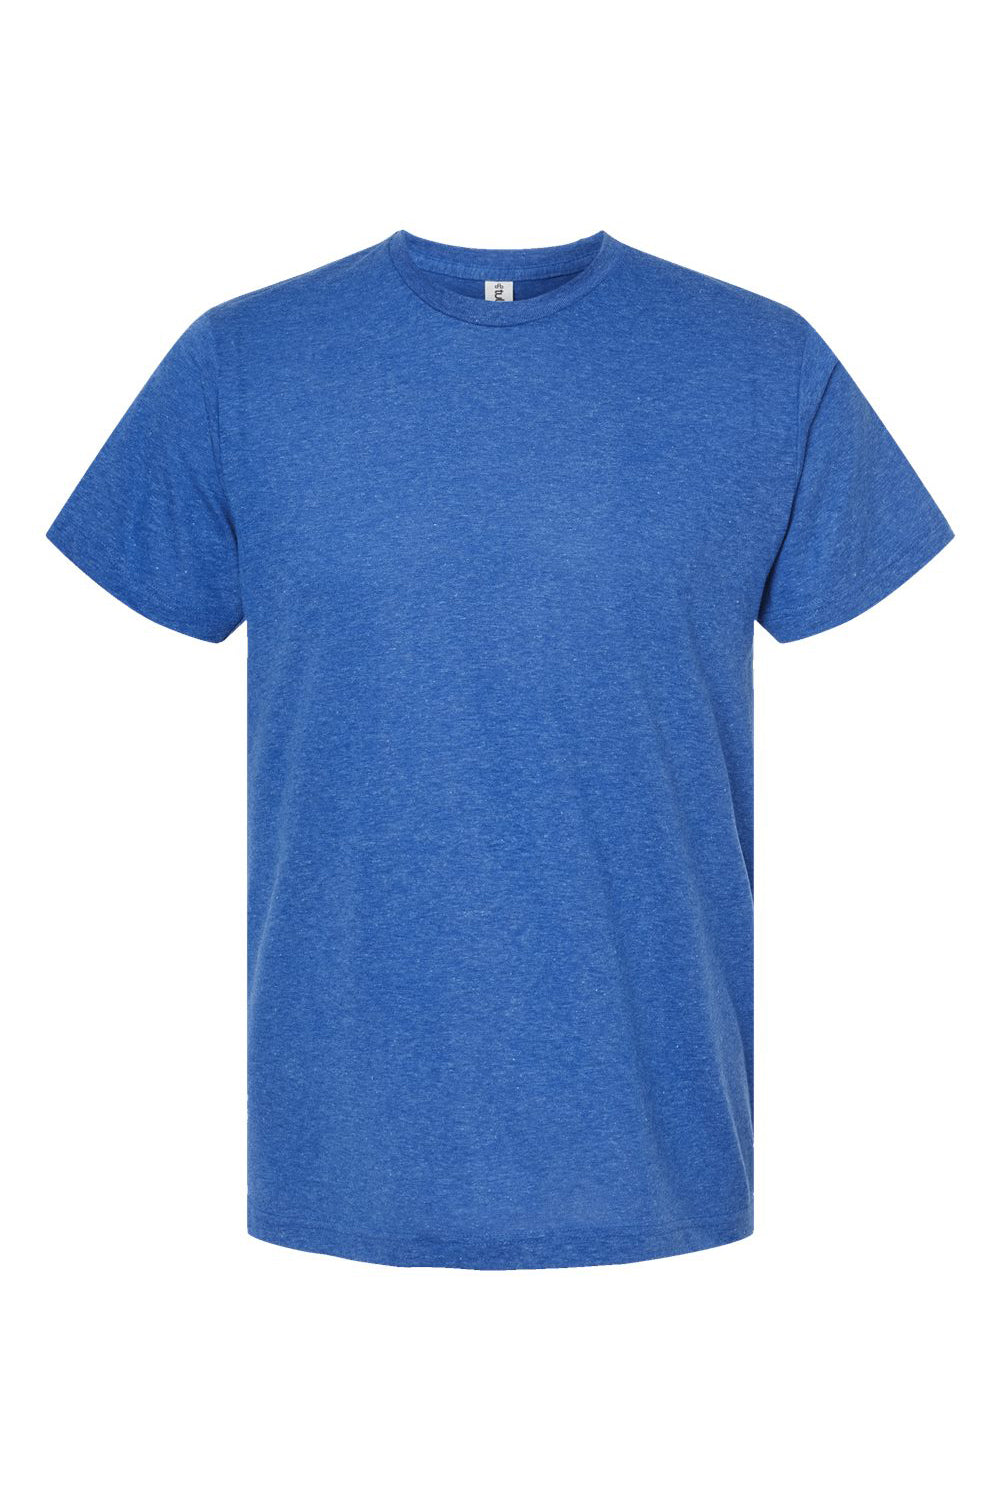 Tultex 241 Mens Poly-Rich Short Sleeve Crewneck T-Shirt Heather Royal Blue Flat Front